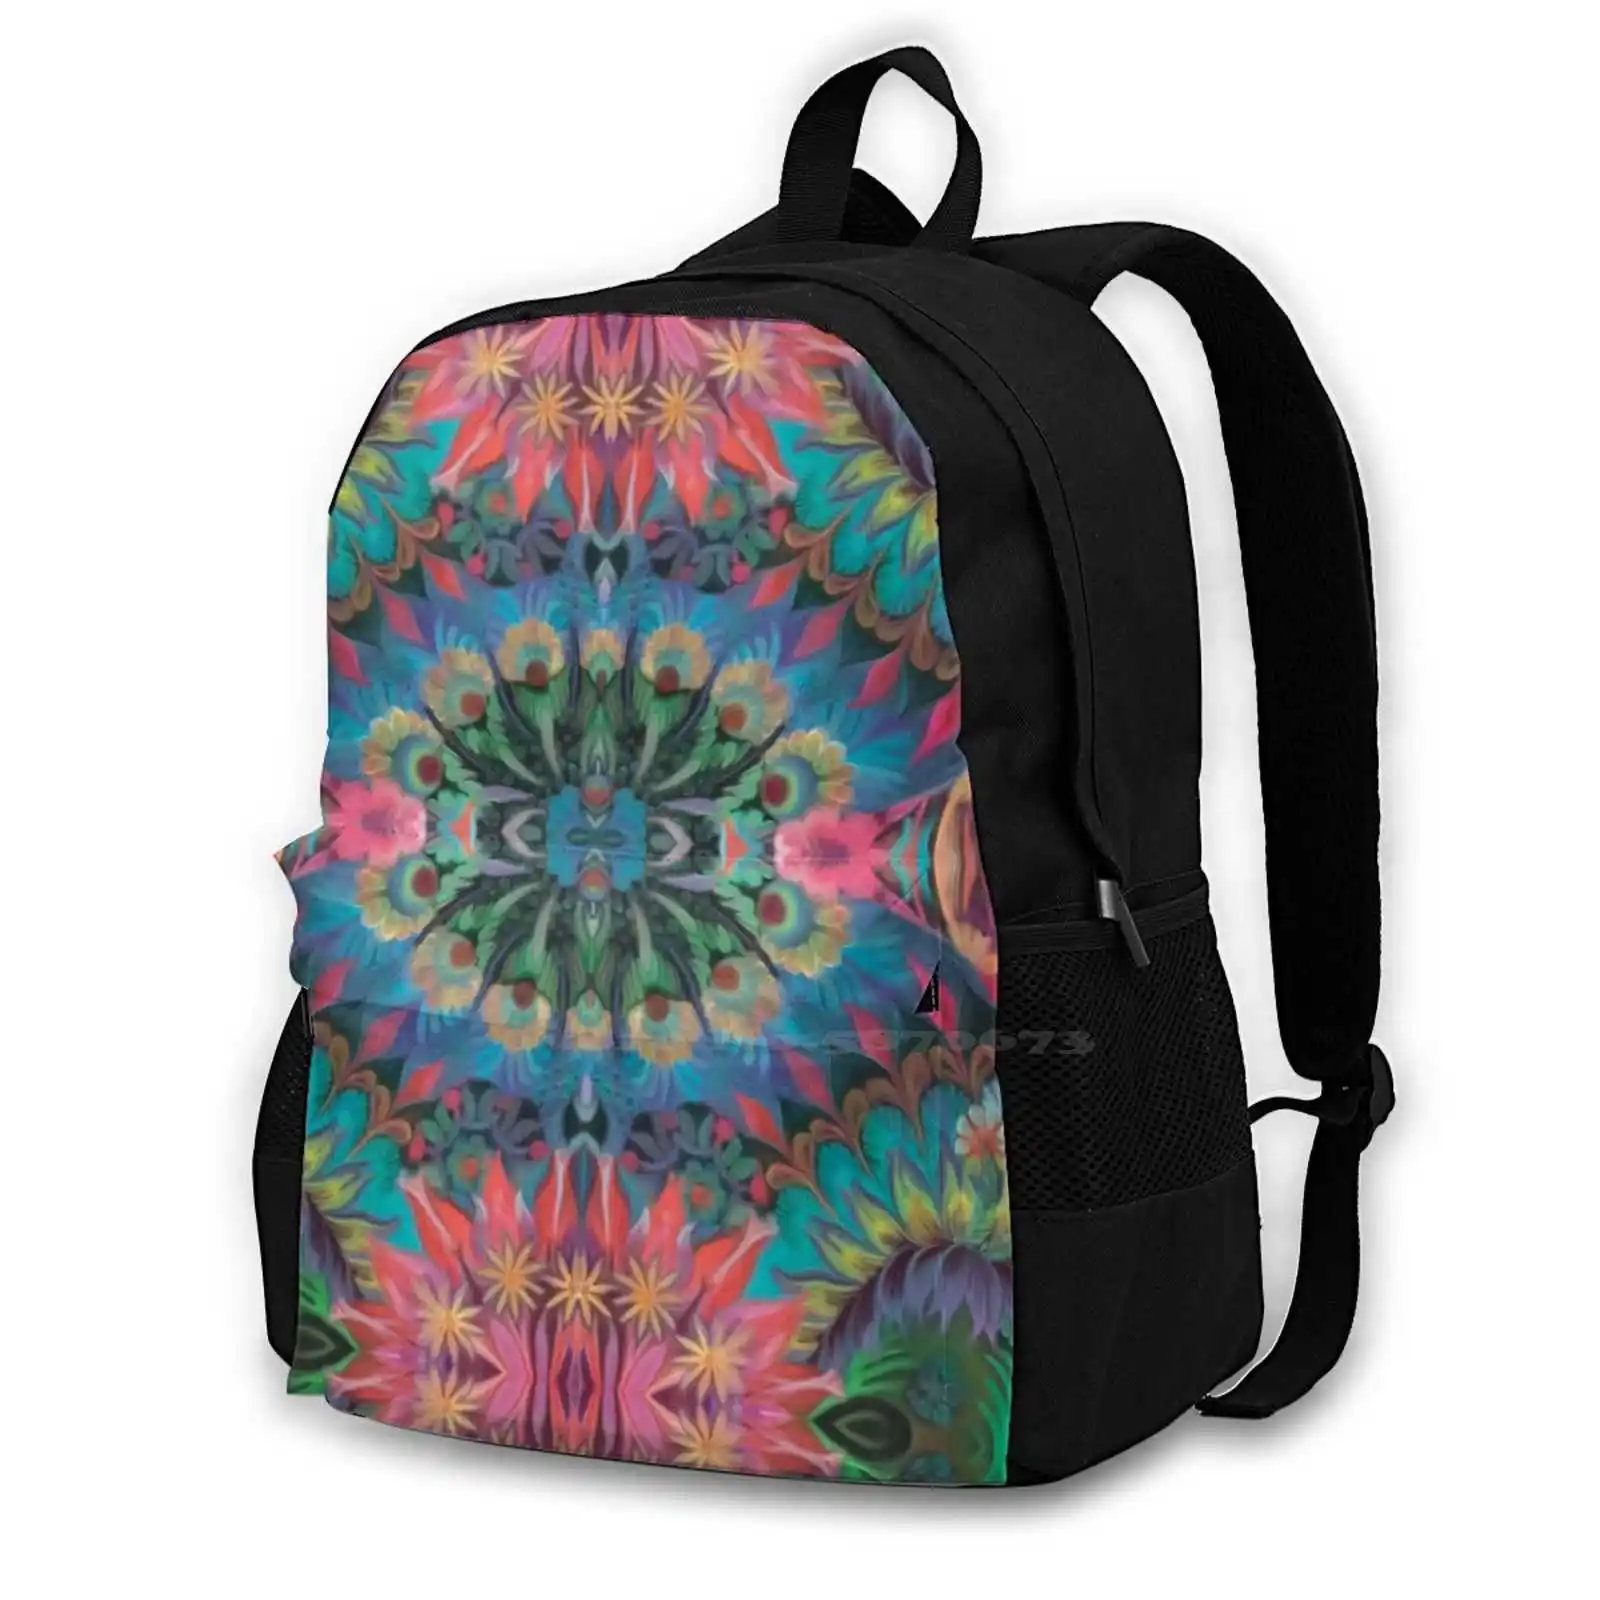 

Ori Color School Bags For Teenage Girls Laptop Travel Bags Mandela Symmetry Symmetrical Airbrush Flowers Ethnic Indian Al